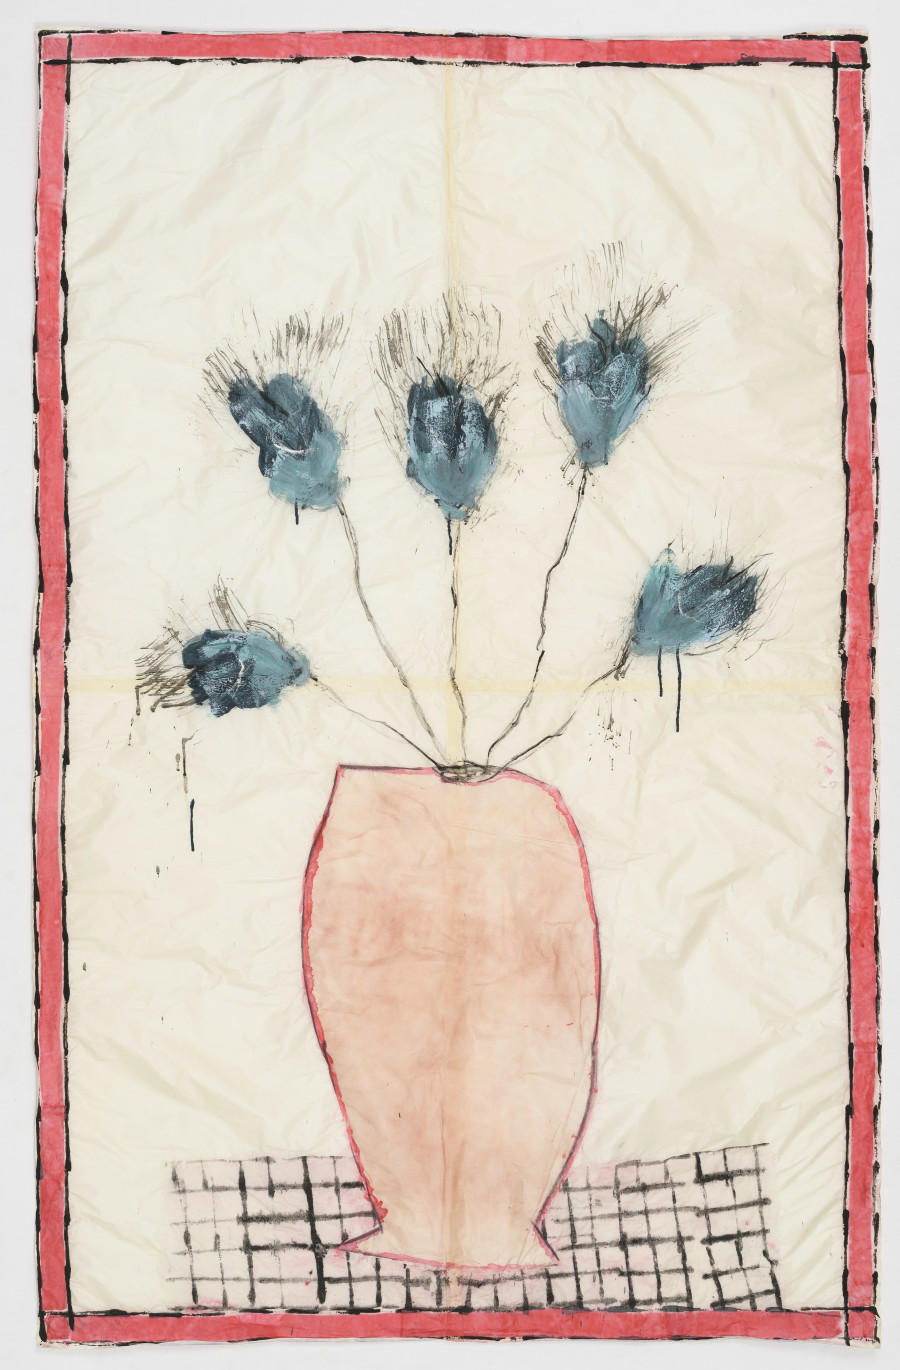 Isabella Ducrot, Big Pot V, 2022, Pencil, collages, pigment, textile on Japan paper, 190 x 126 cm. Photo credit: Giorgio Benni